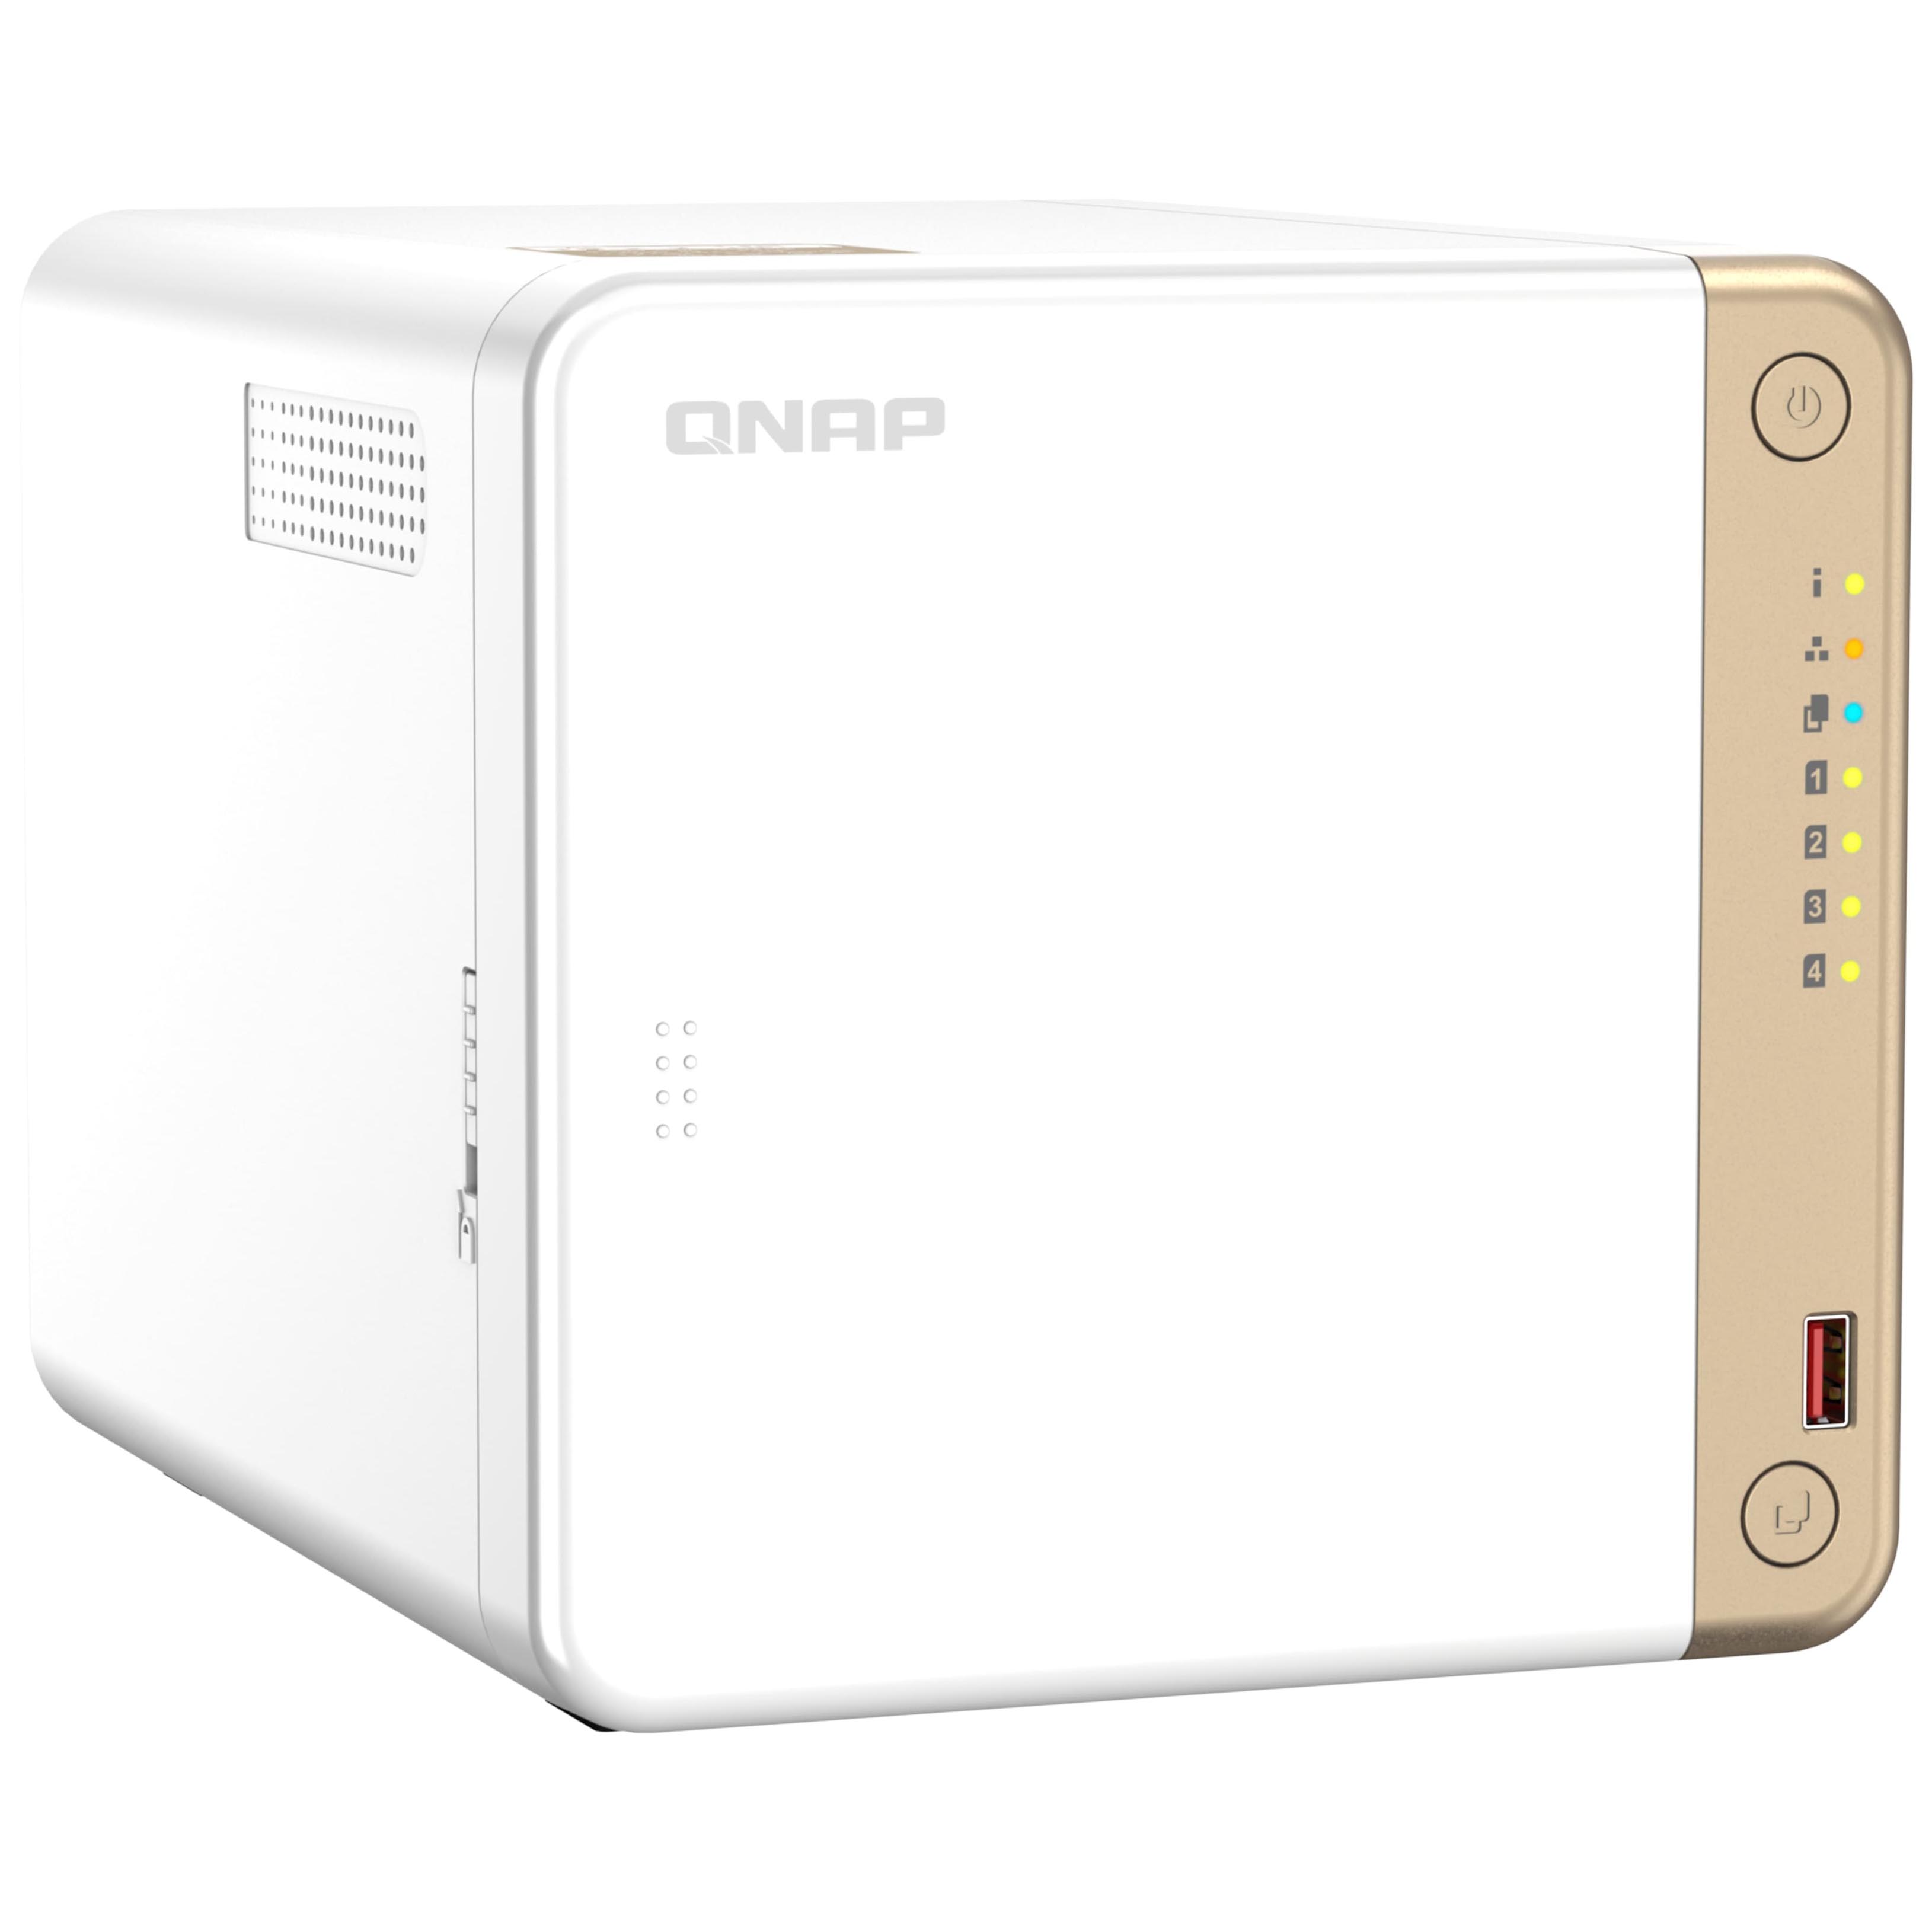 Сетевое хранилище QNAP TS-462 Nas, 4 отсека, без дисков, белый сетевое хранилище qnap nas ts 431k